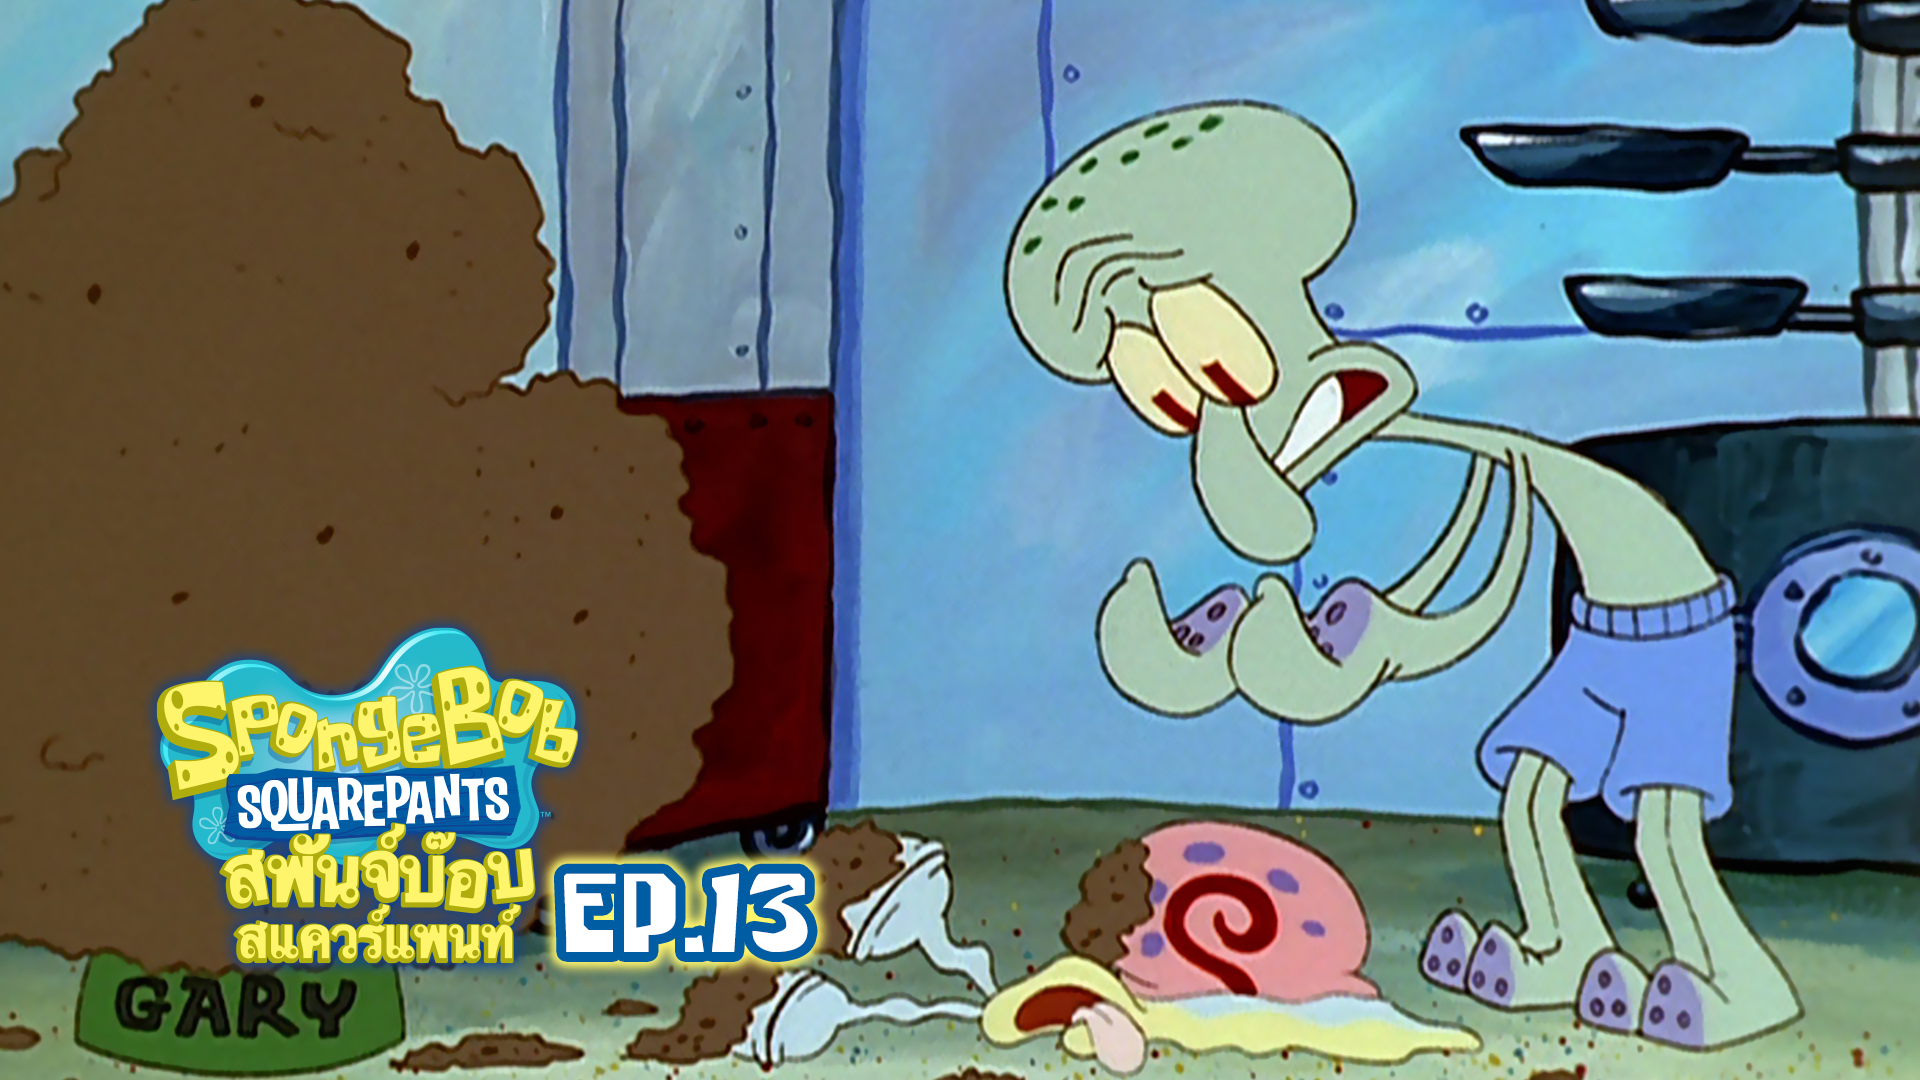 EP02 Bubblestand  Ripped Pants  SpongeBob SquarePants Season 1  Watch  Series Online